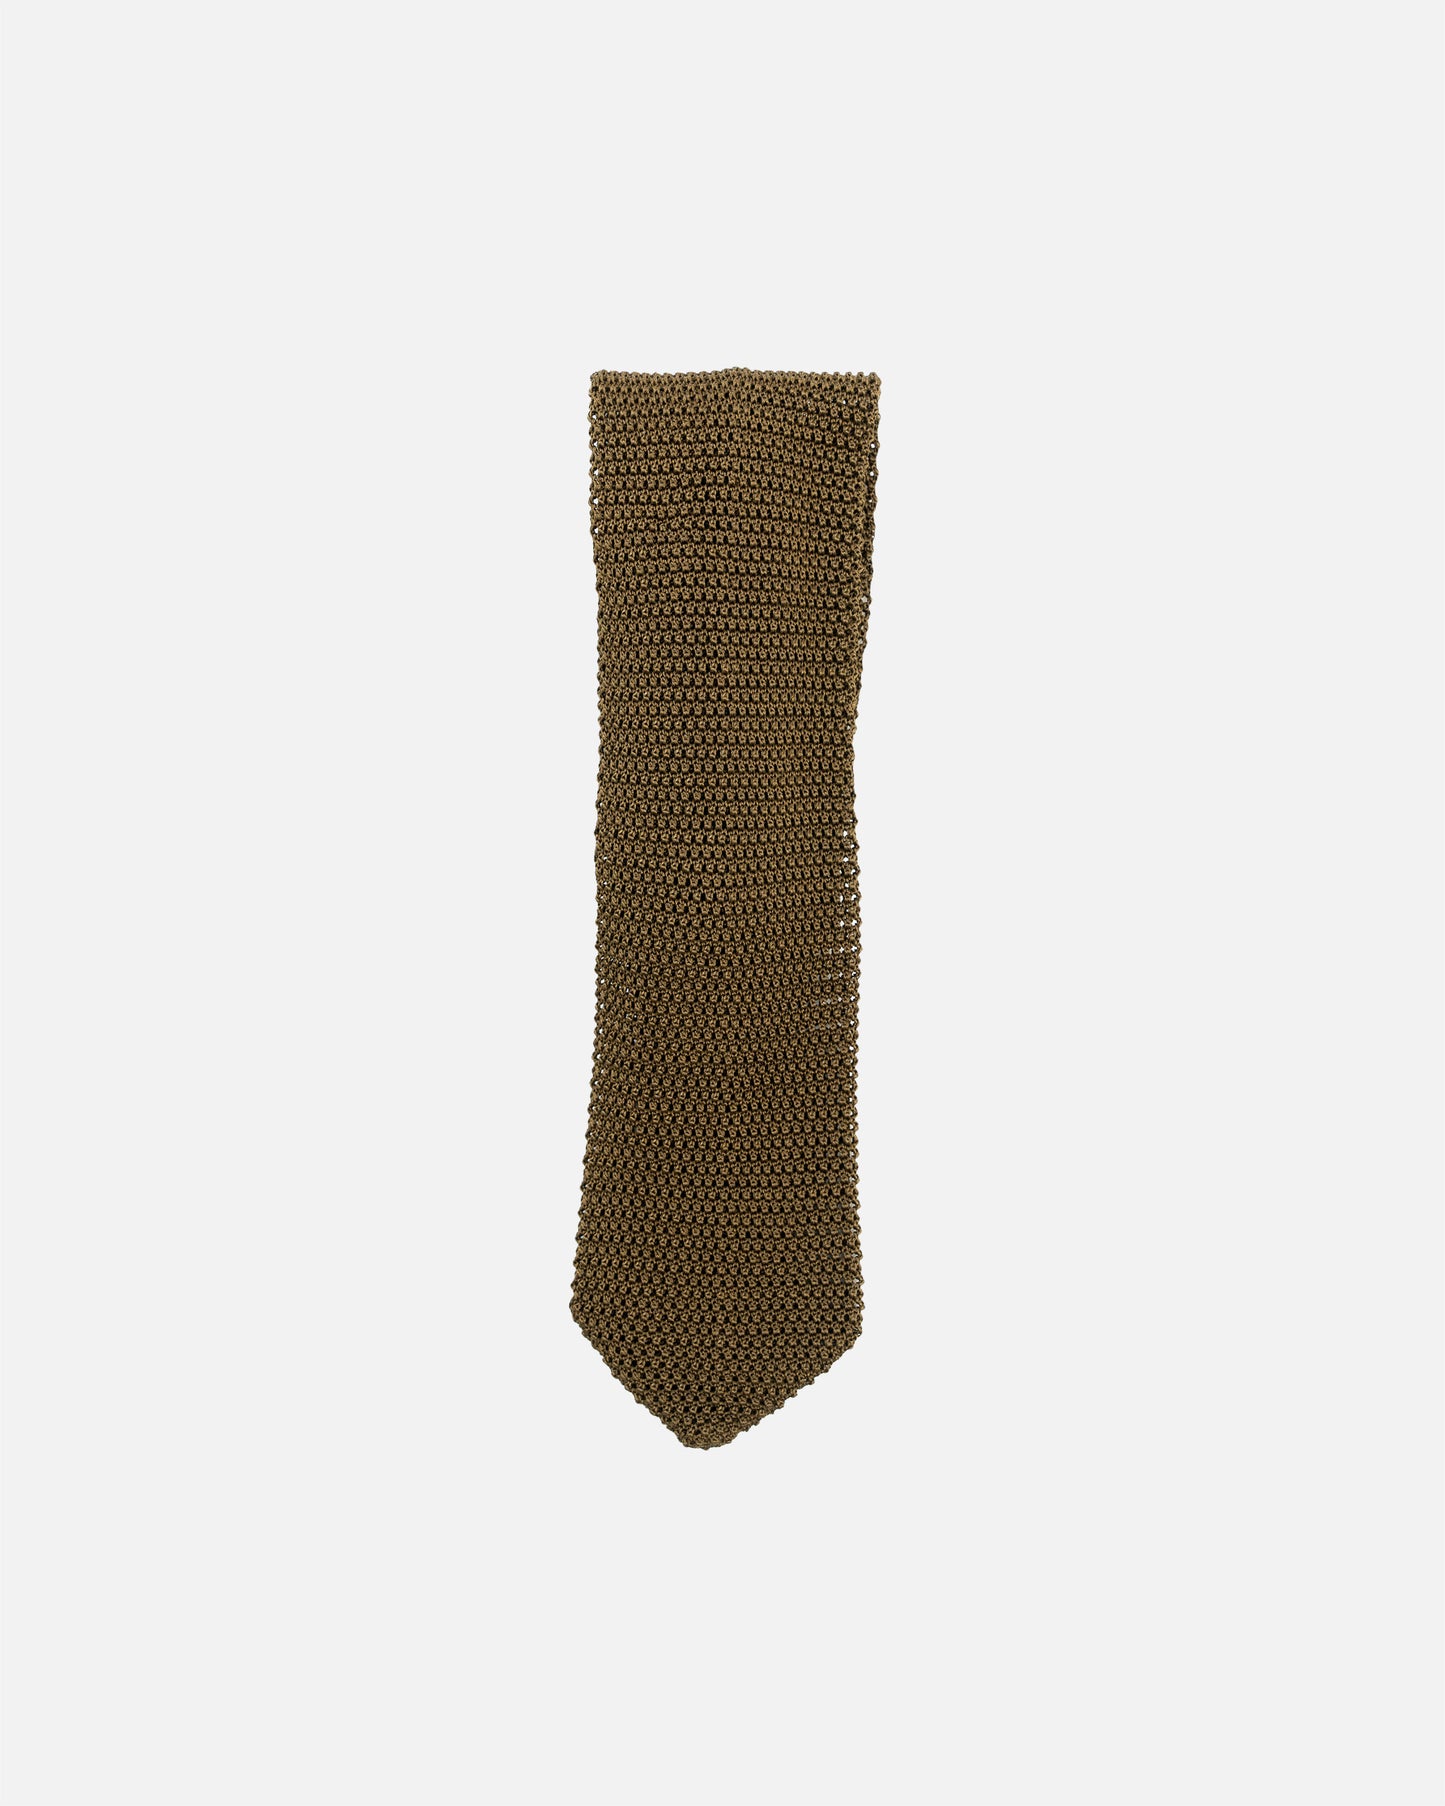 The Decorum Knit Tie in Olive